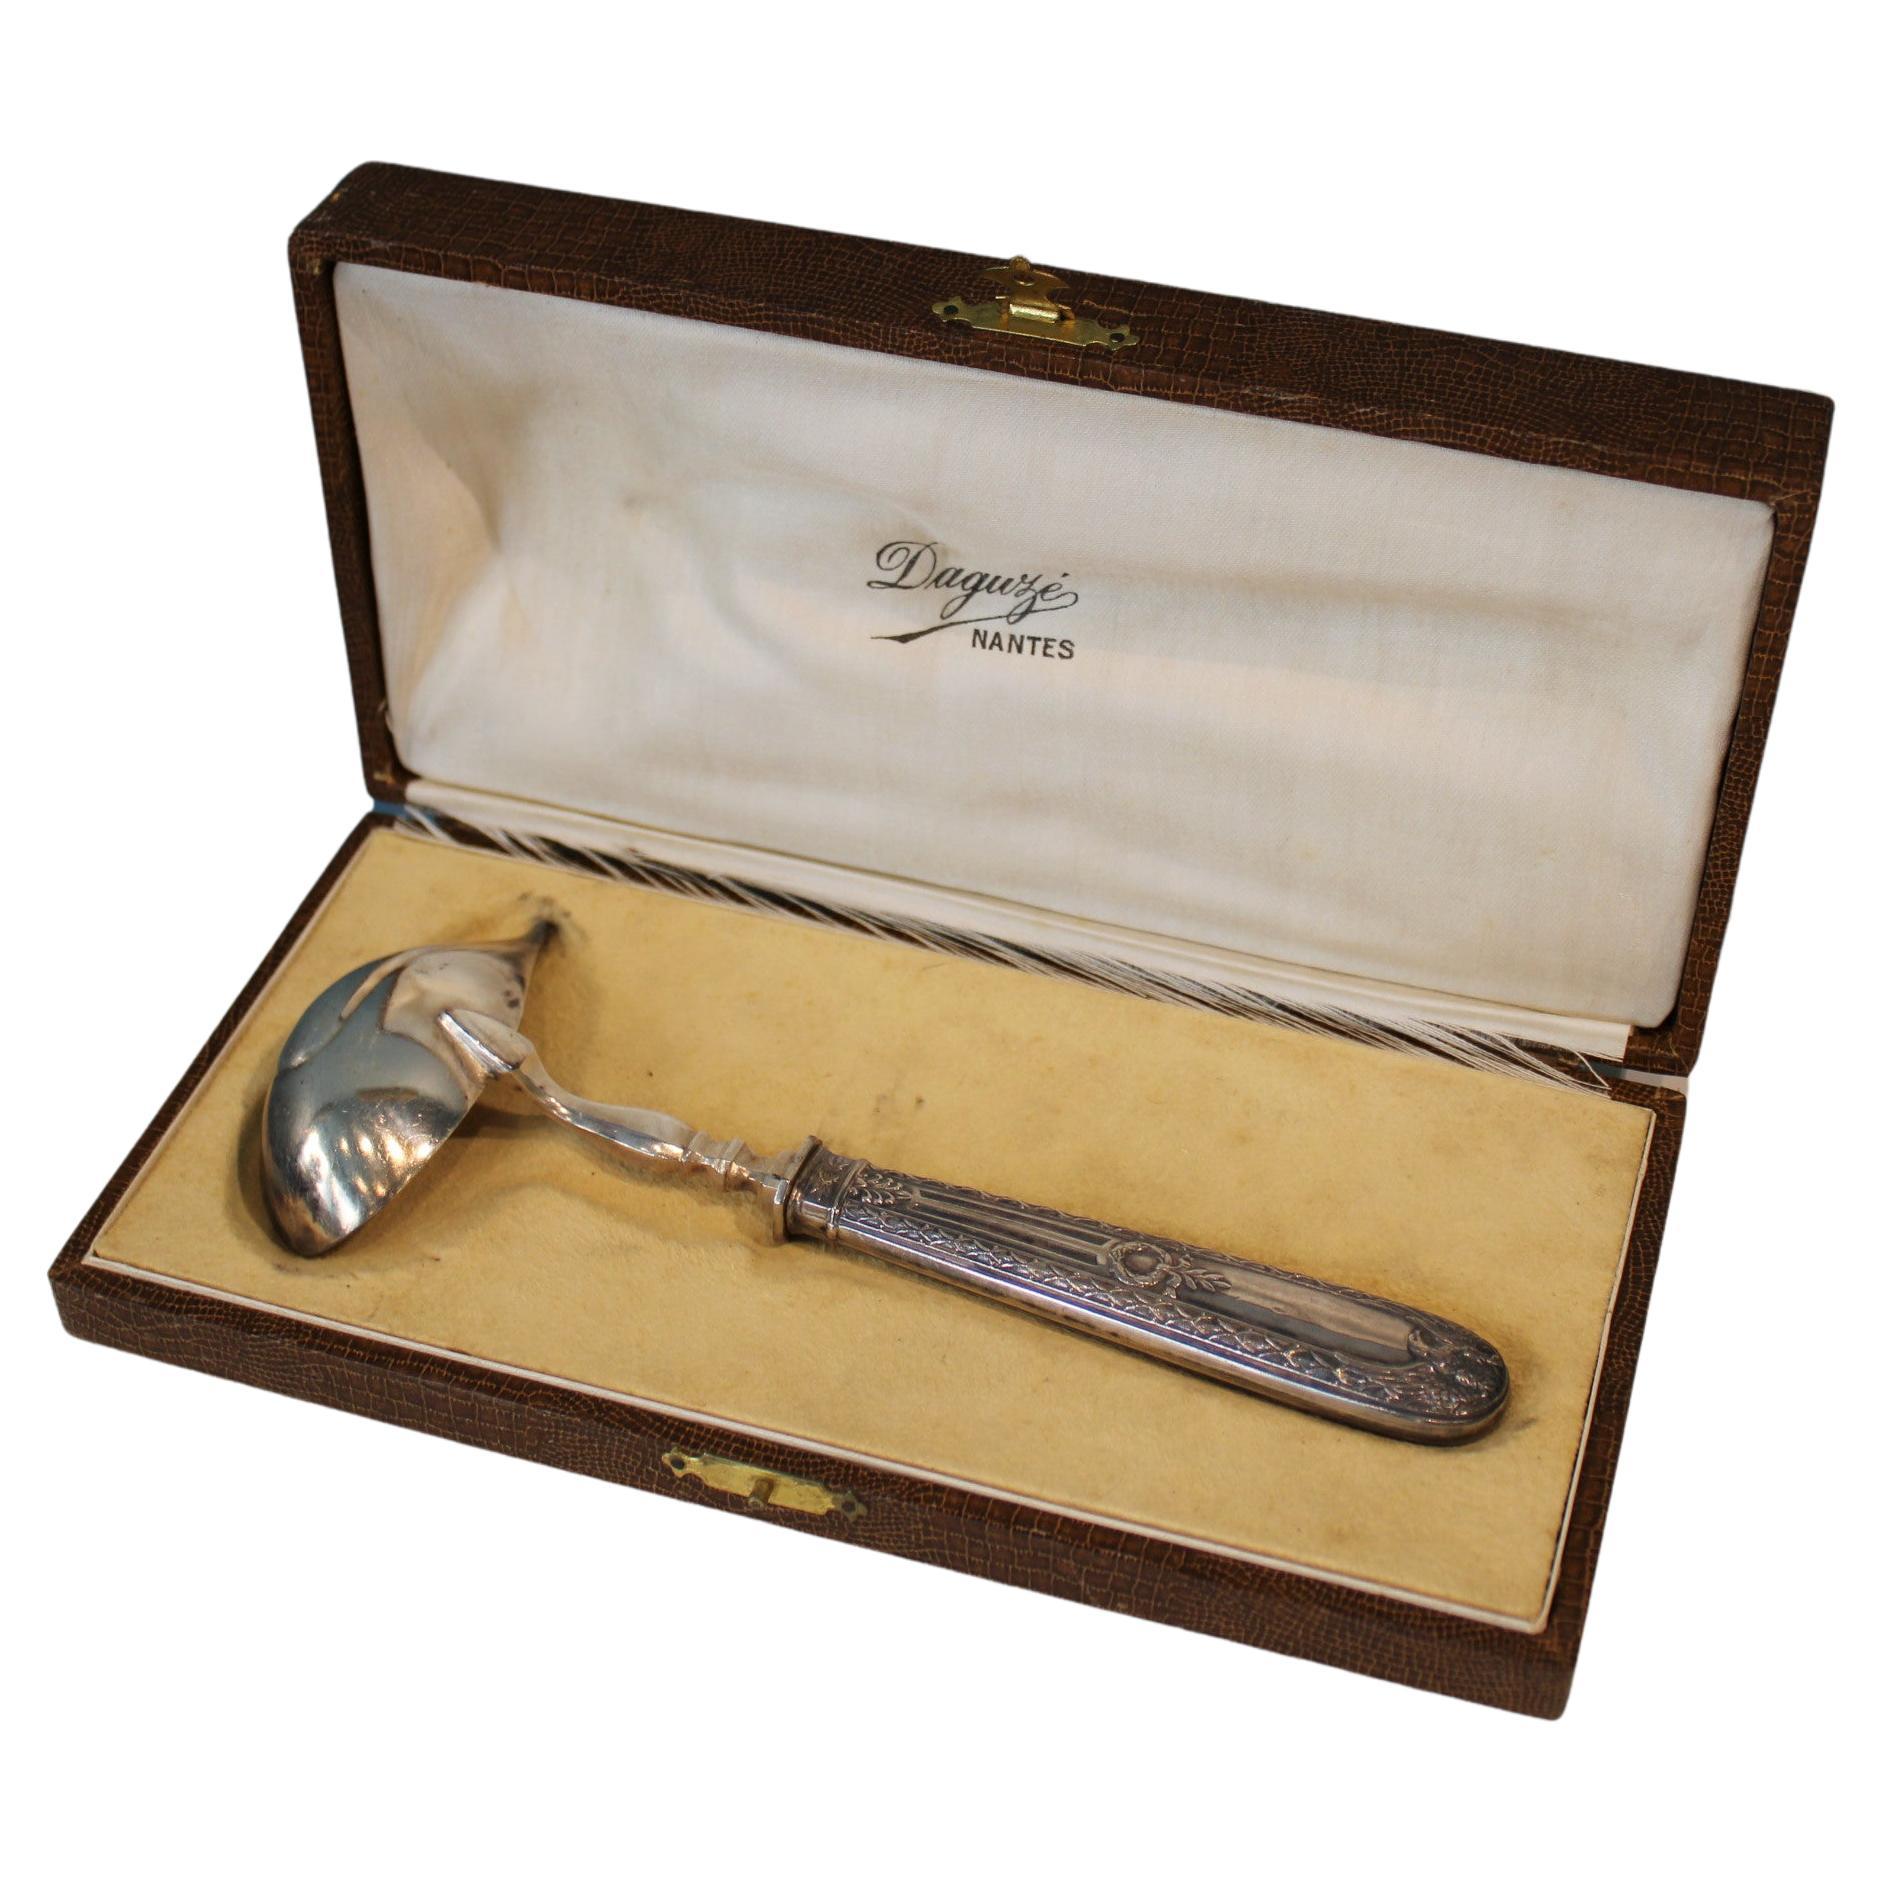 Silver metal gravy spoon in her box